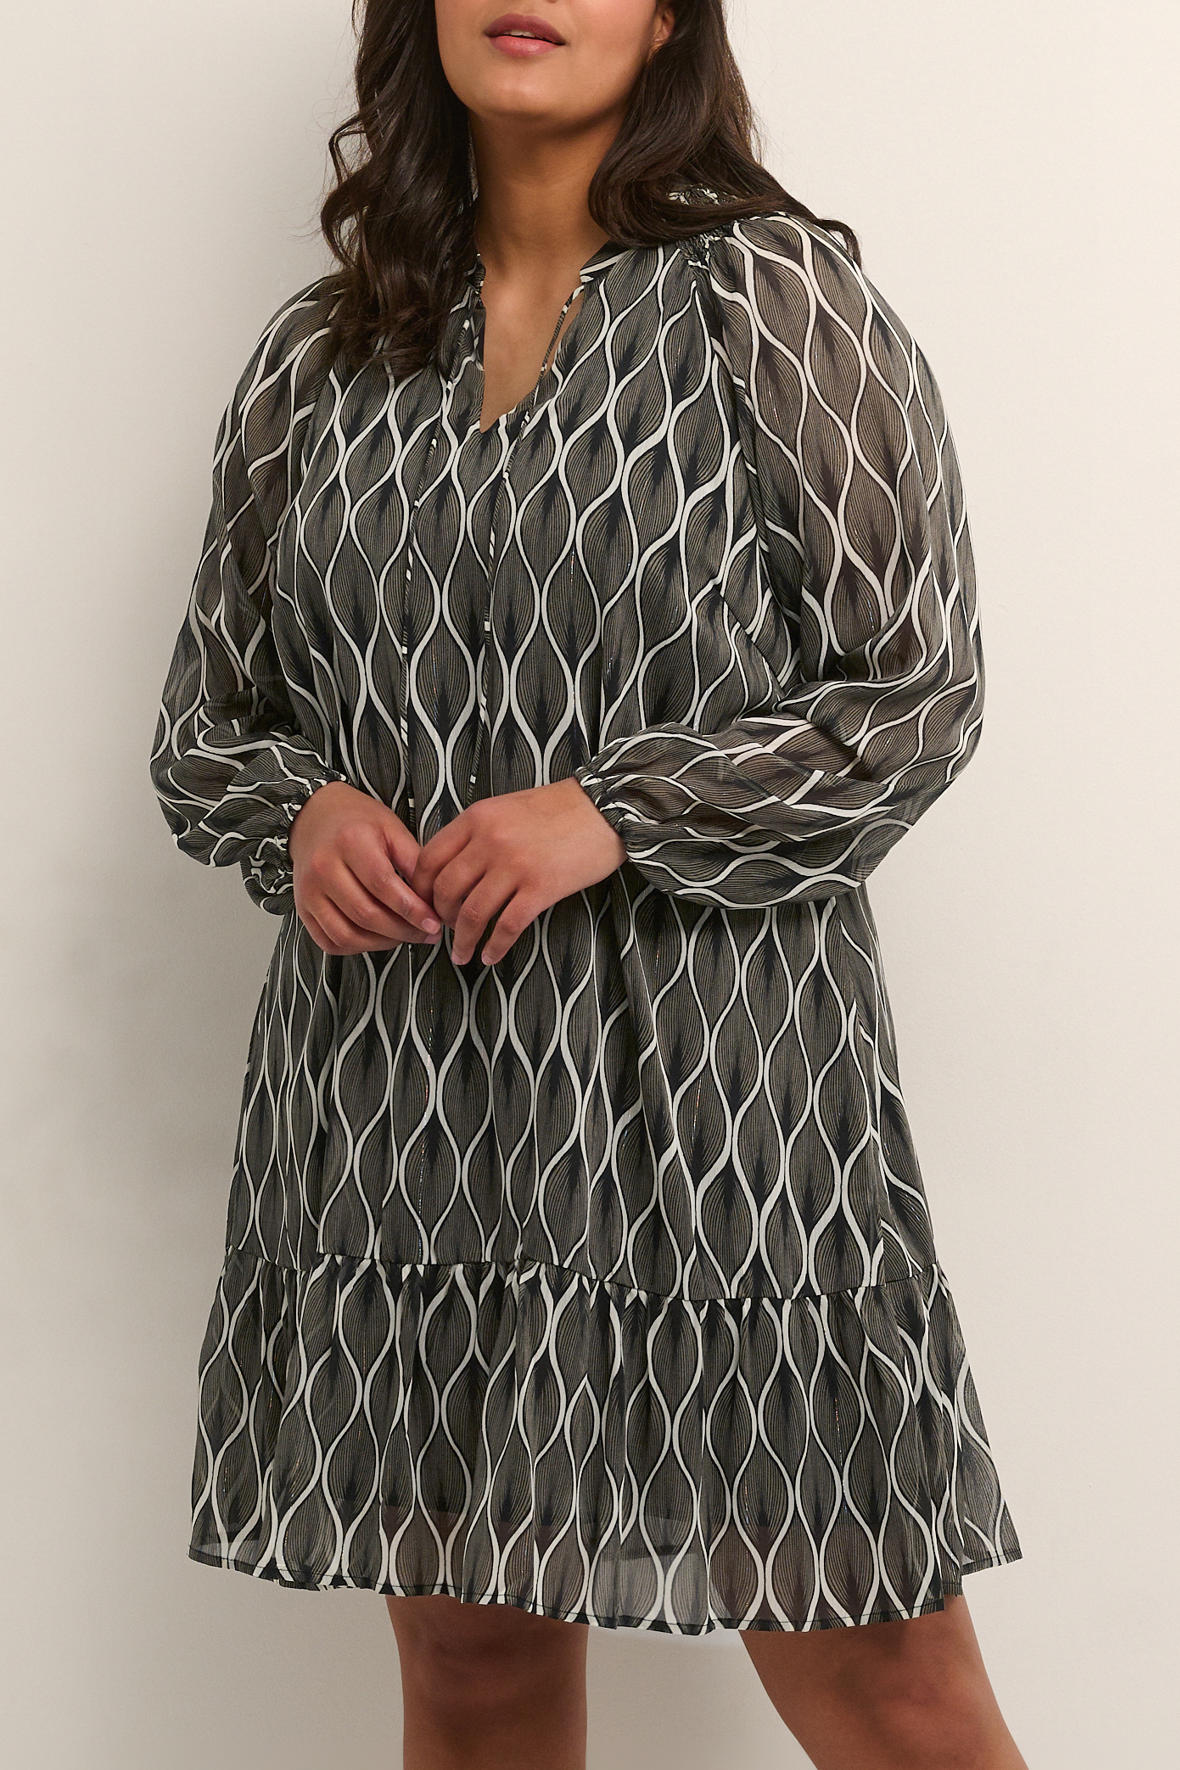 Produkt lure Joseph Banks Kaffe Curve KC-Smila Dress kjole til plus kvinder - forførende - Hos Lohse